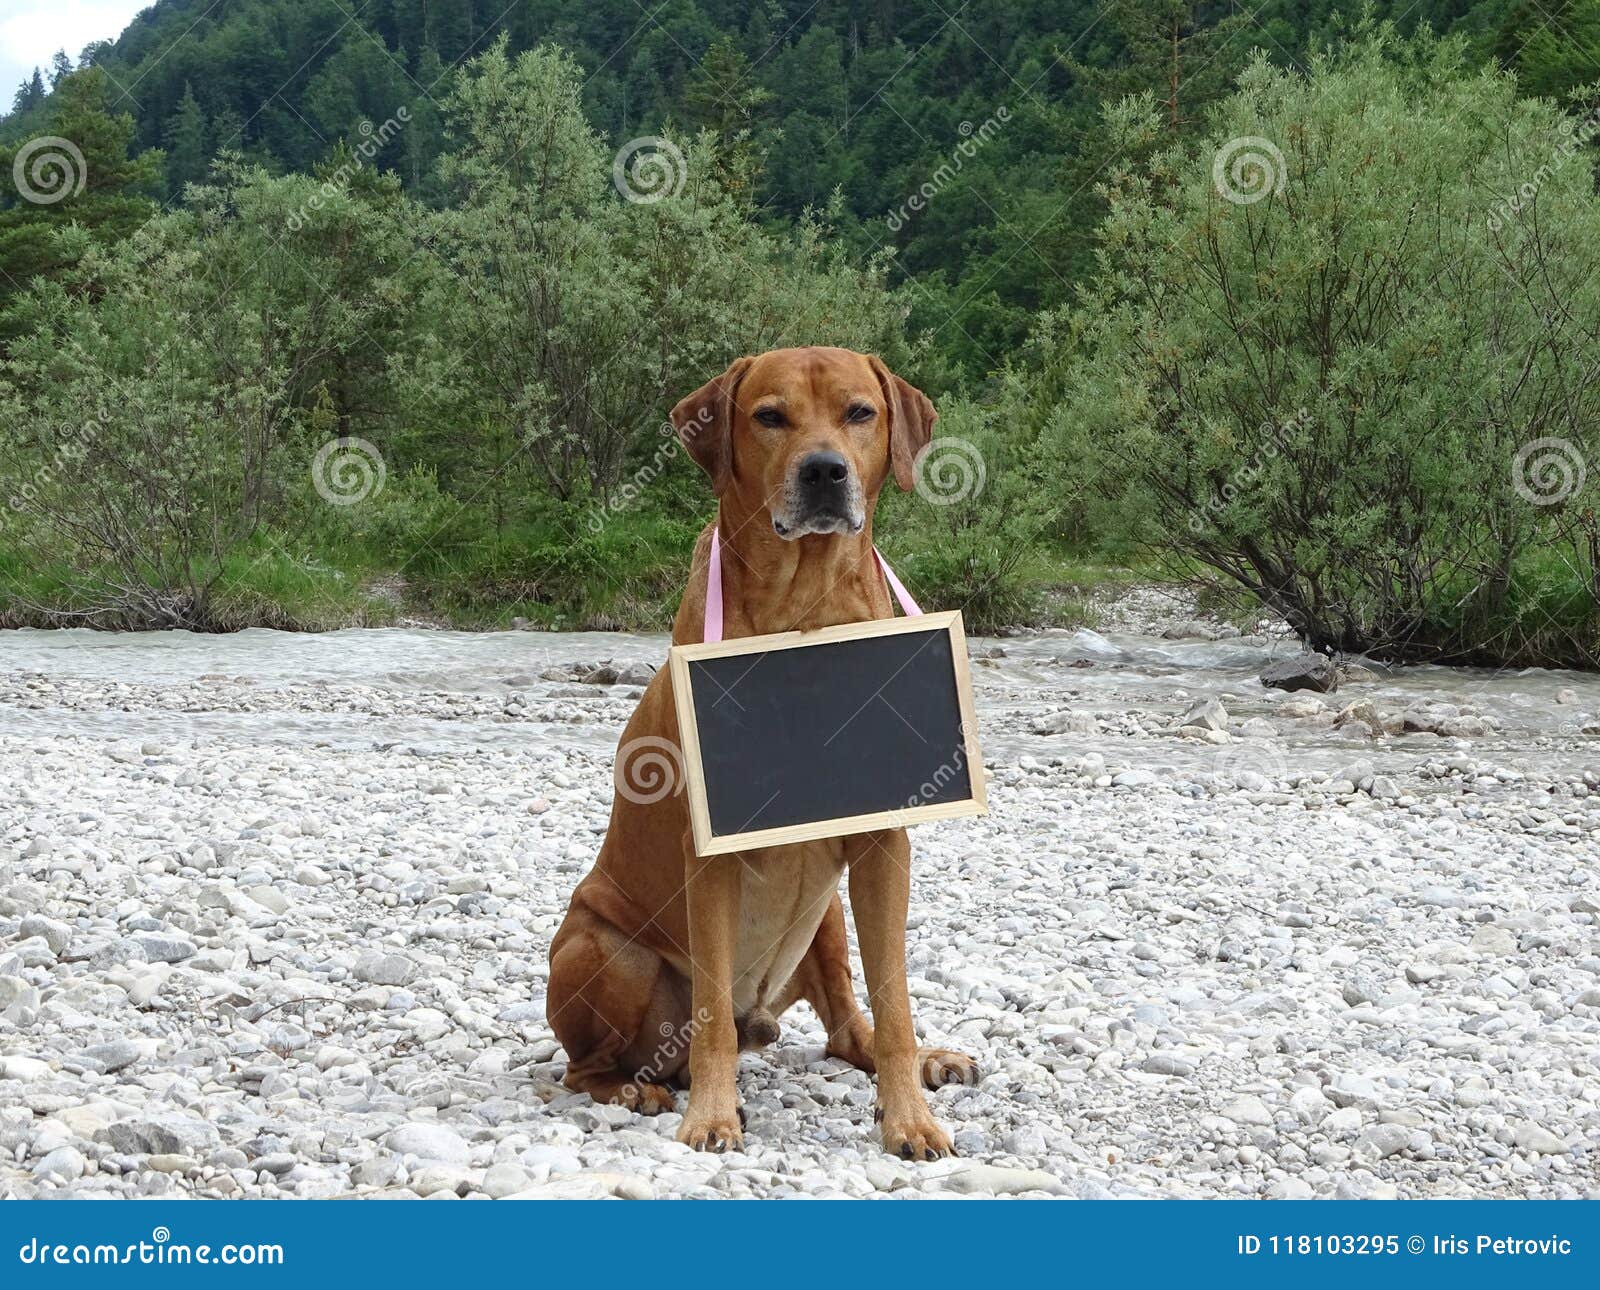 dog rhodesian ridgeback and chalkboard in nature